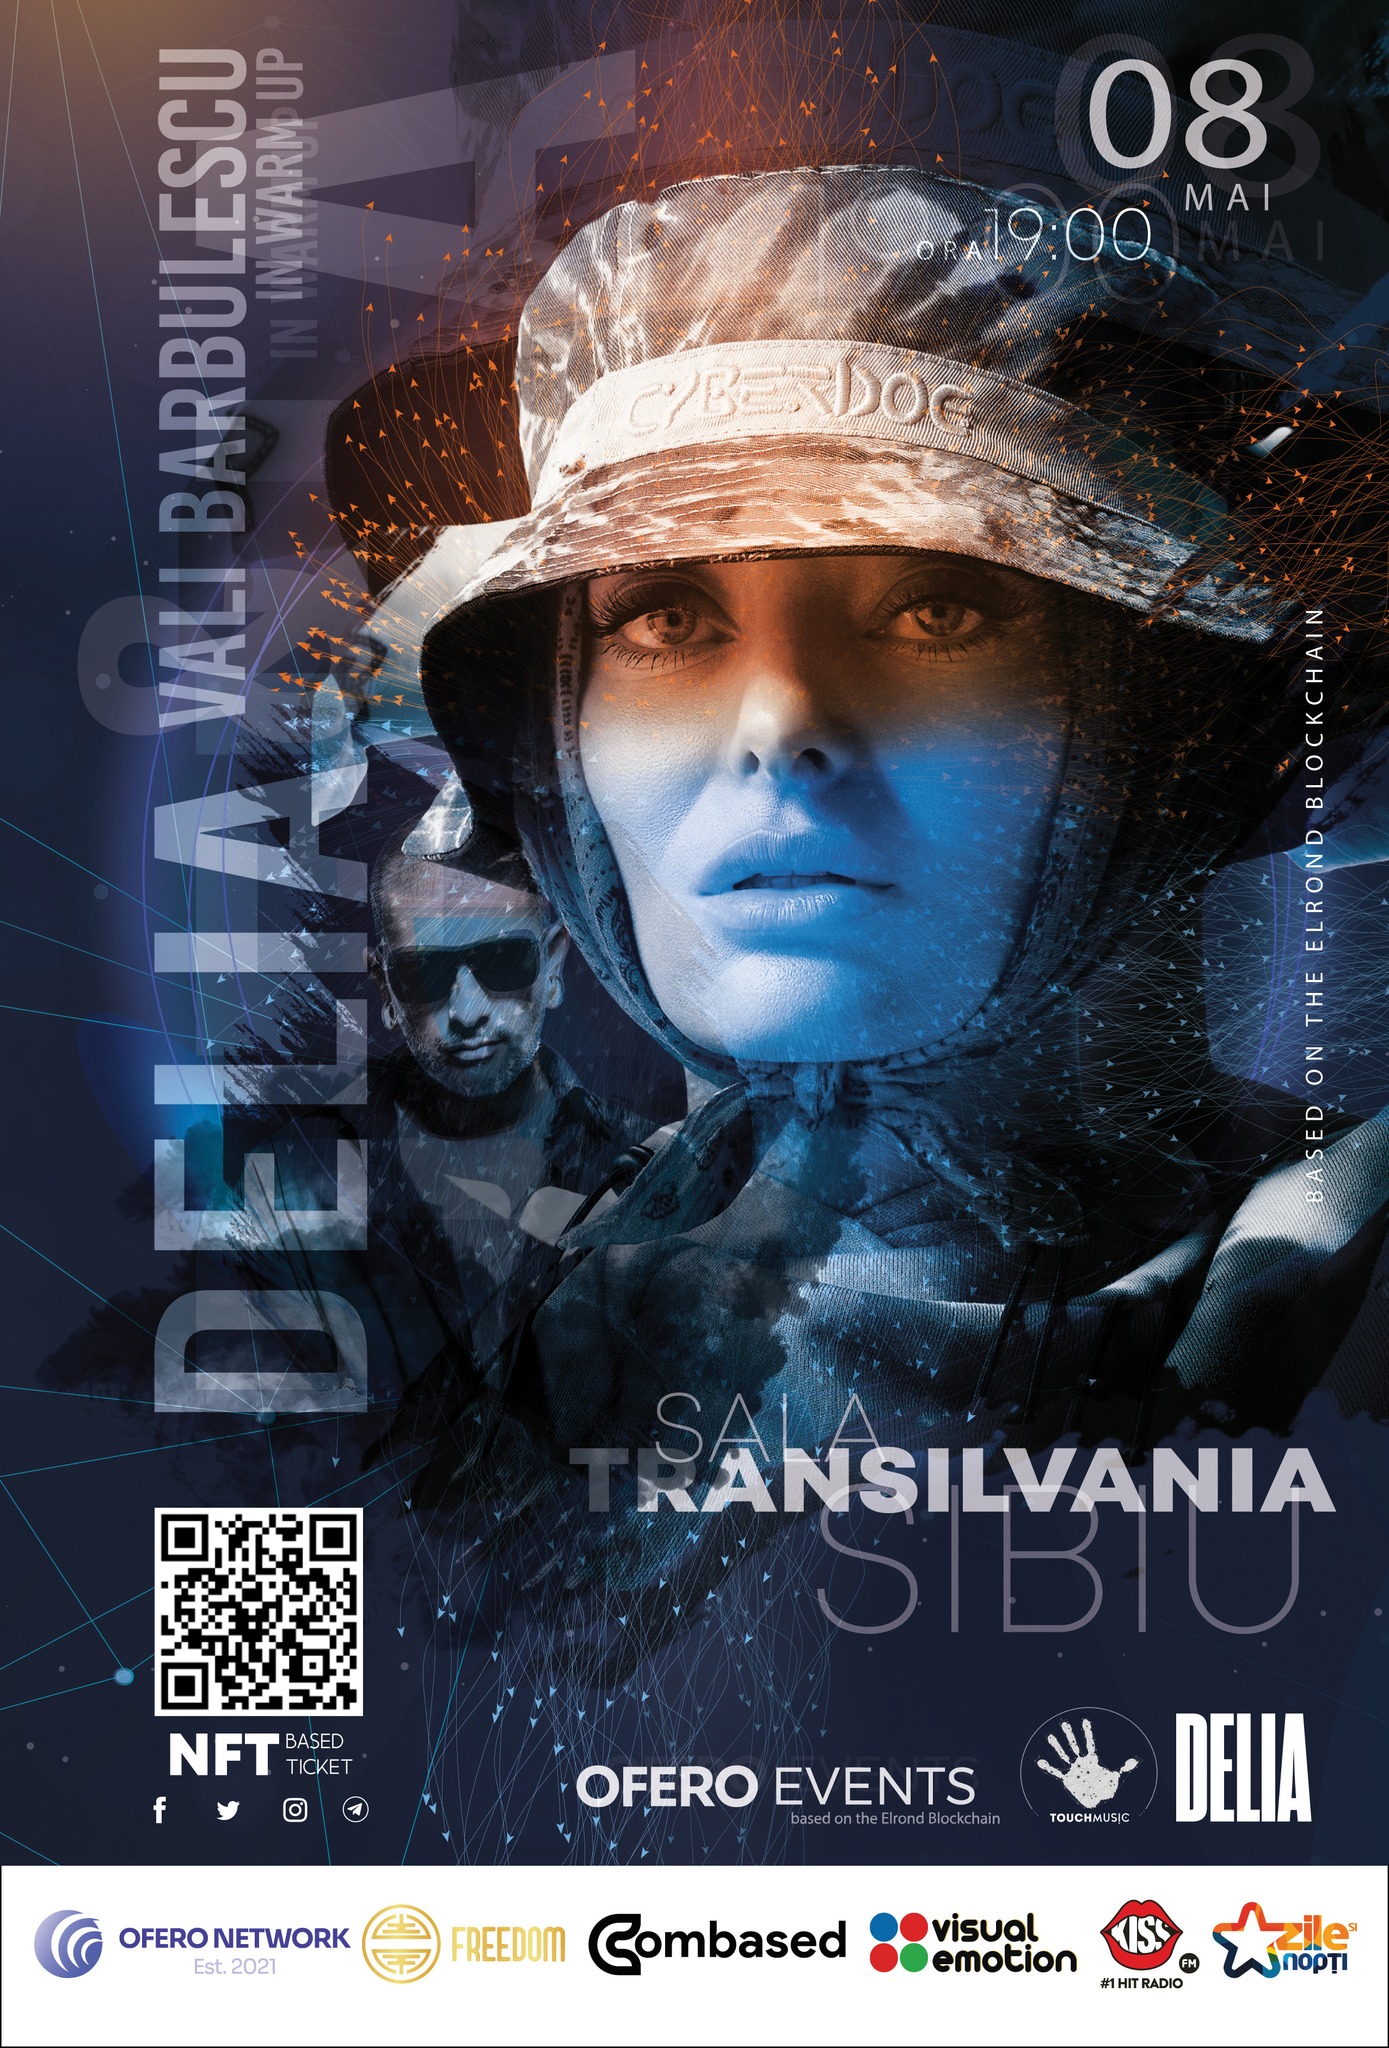 Concert Delia - Sibiu - 8 MAI